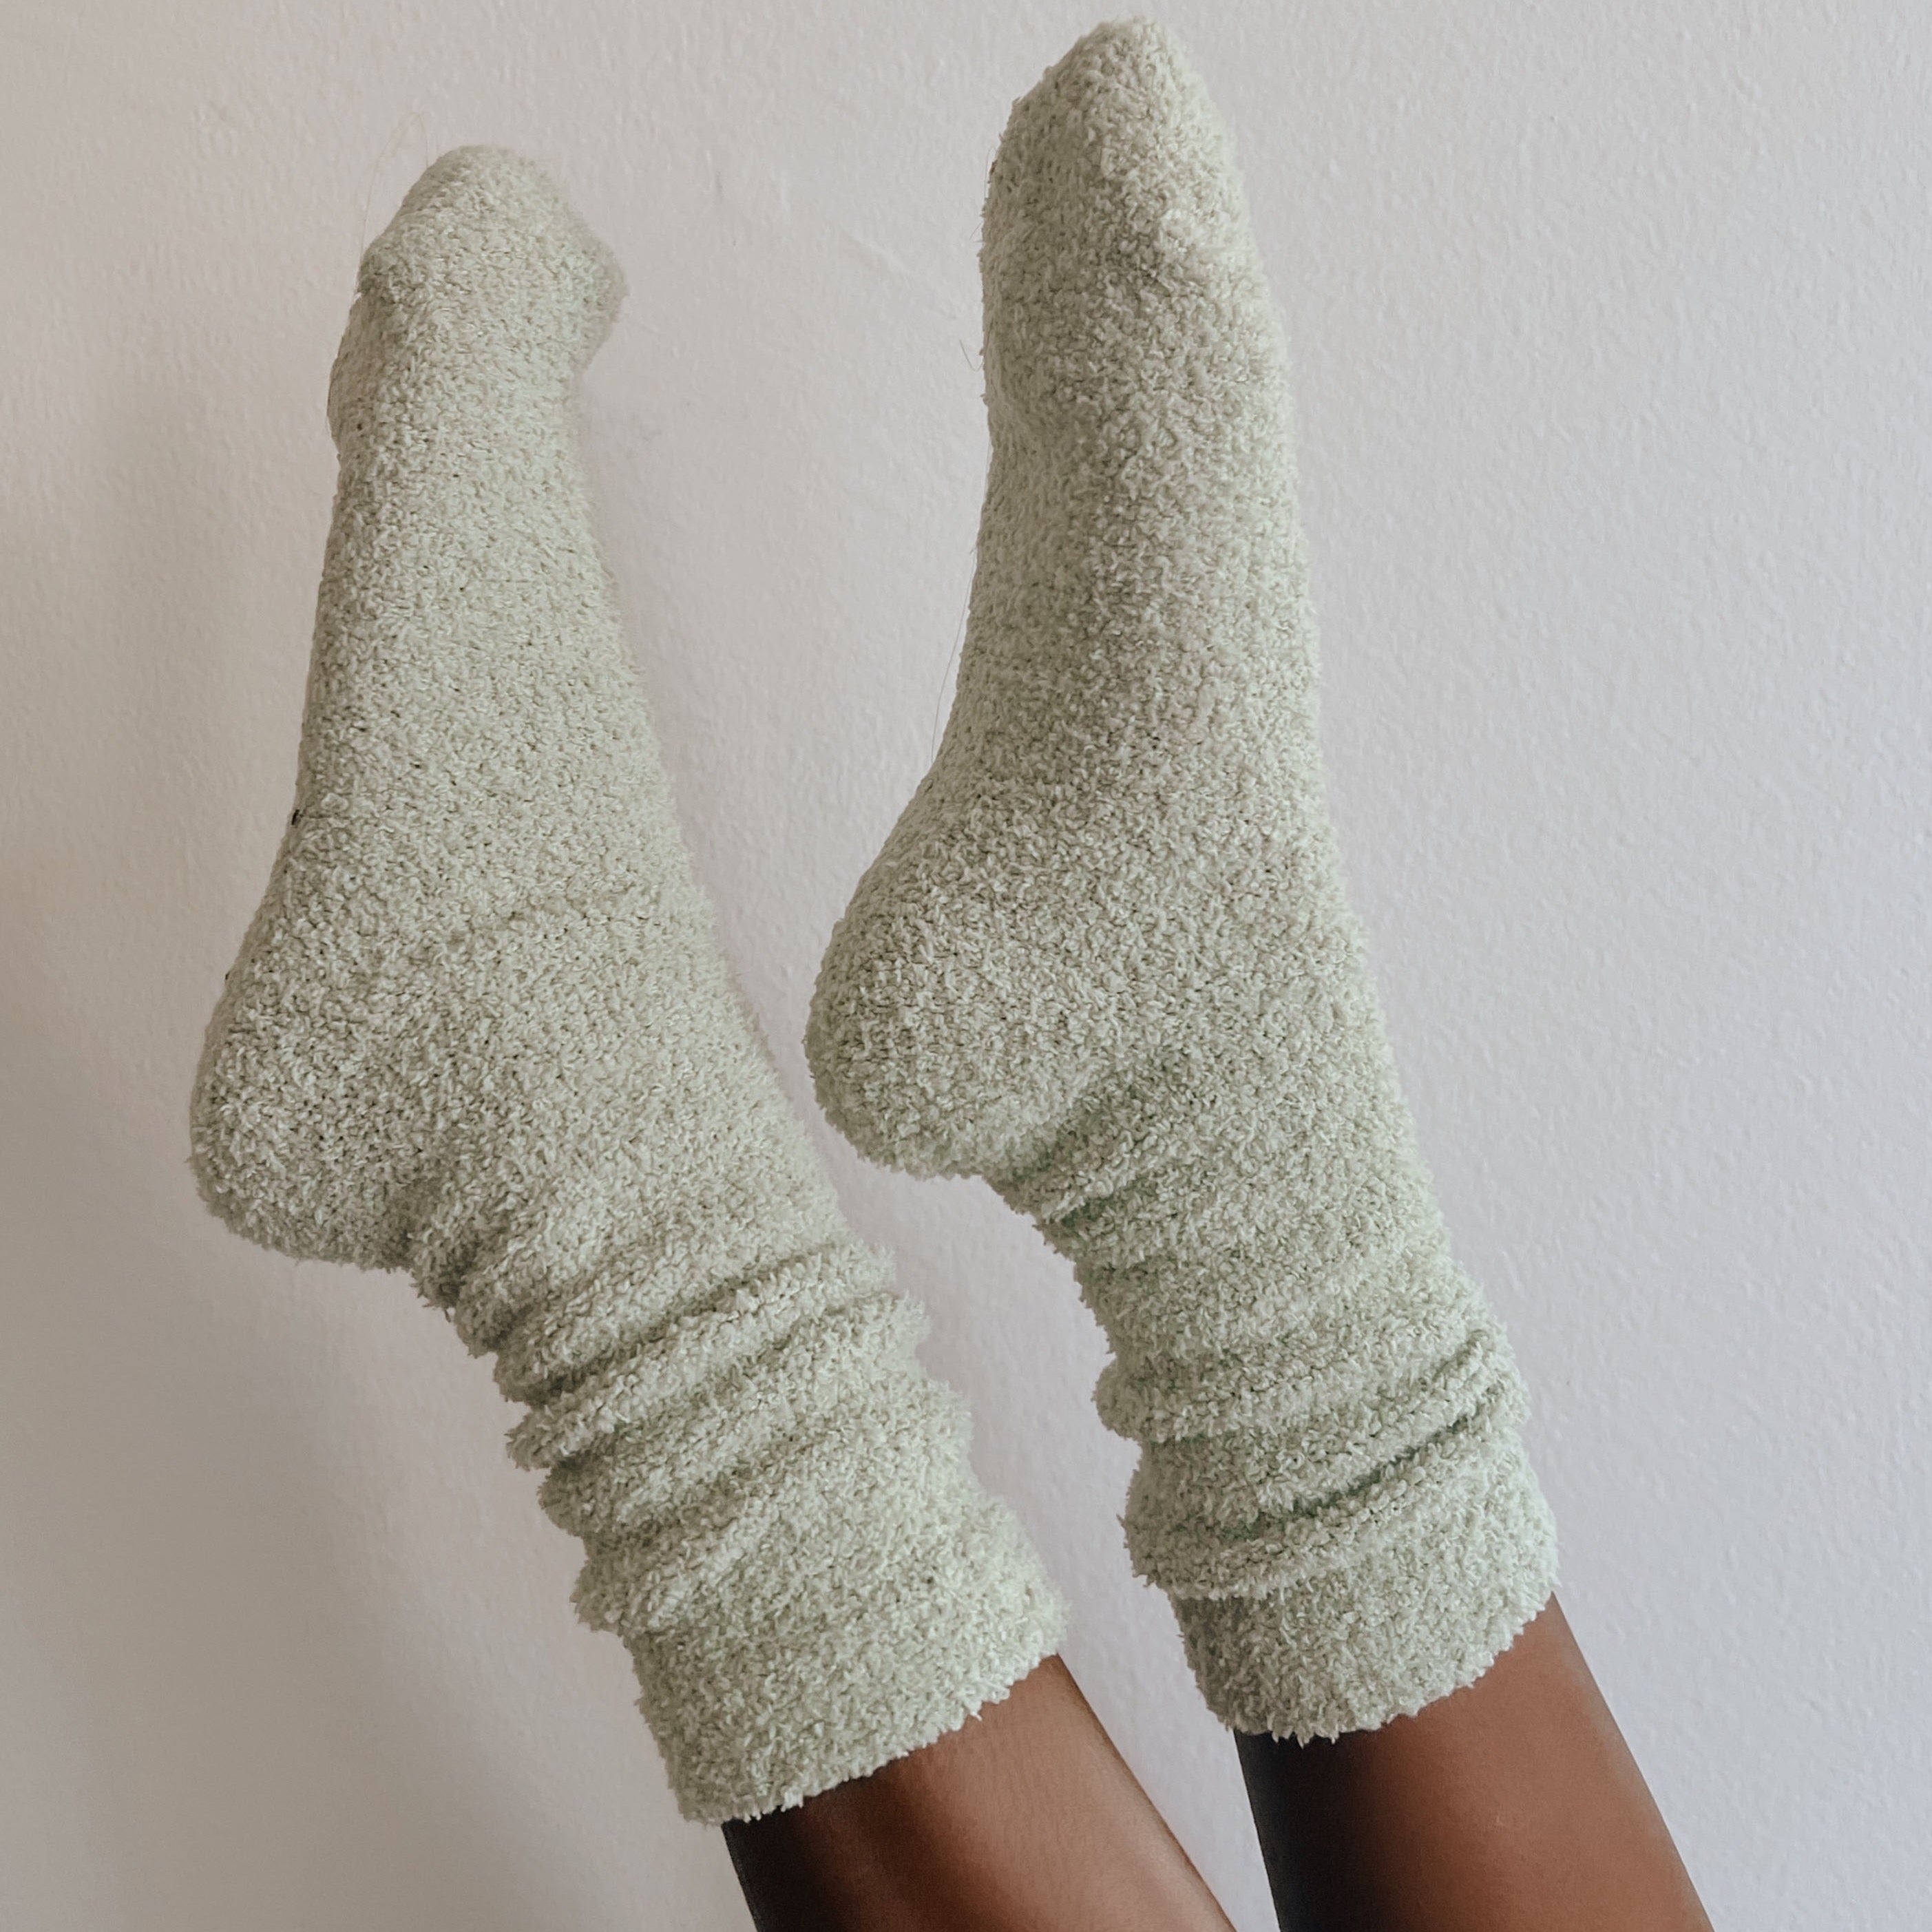 girl wearing green socks in air